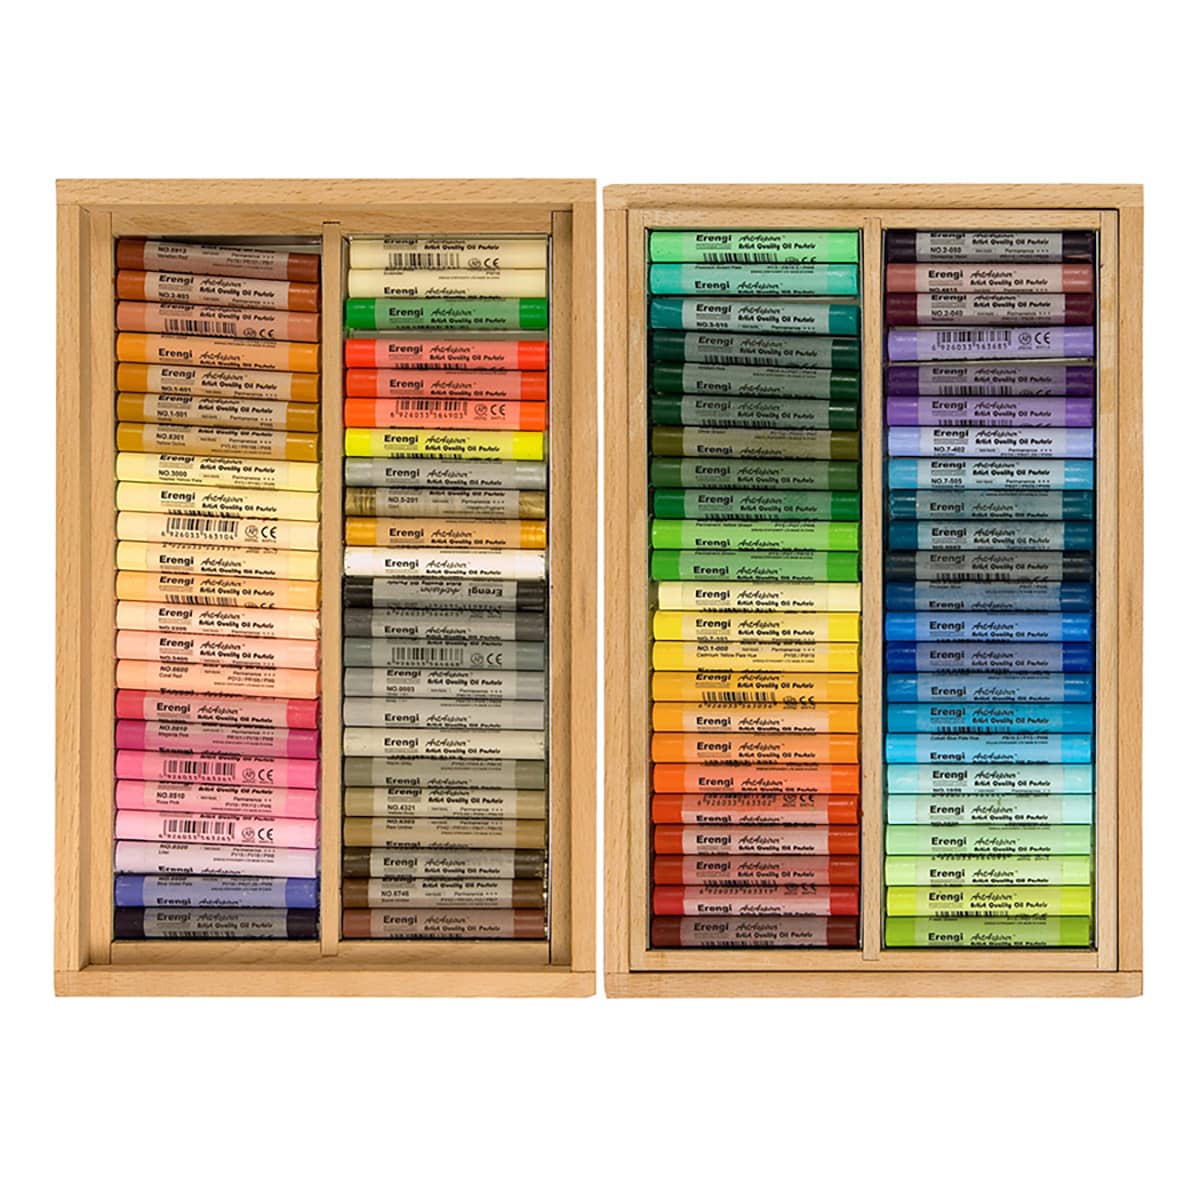 ArtAspirer Oil Pastels Cardboard Box Set of 50